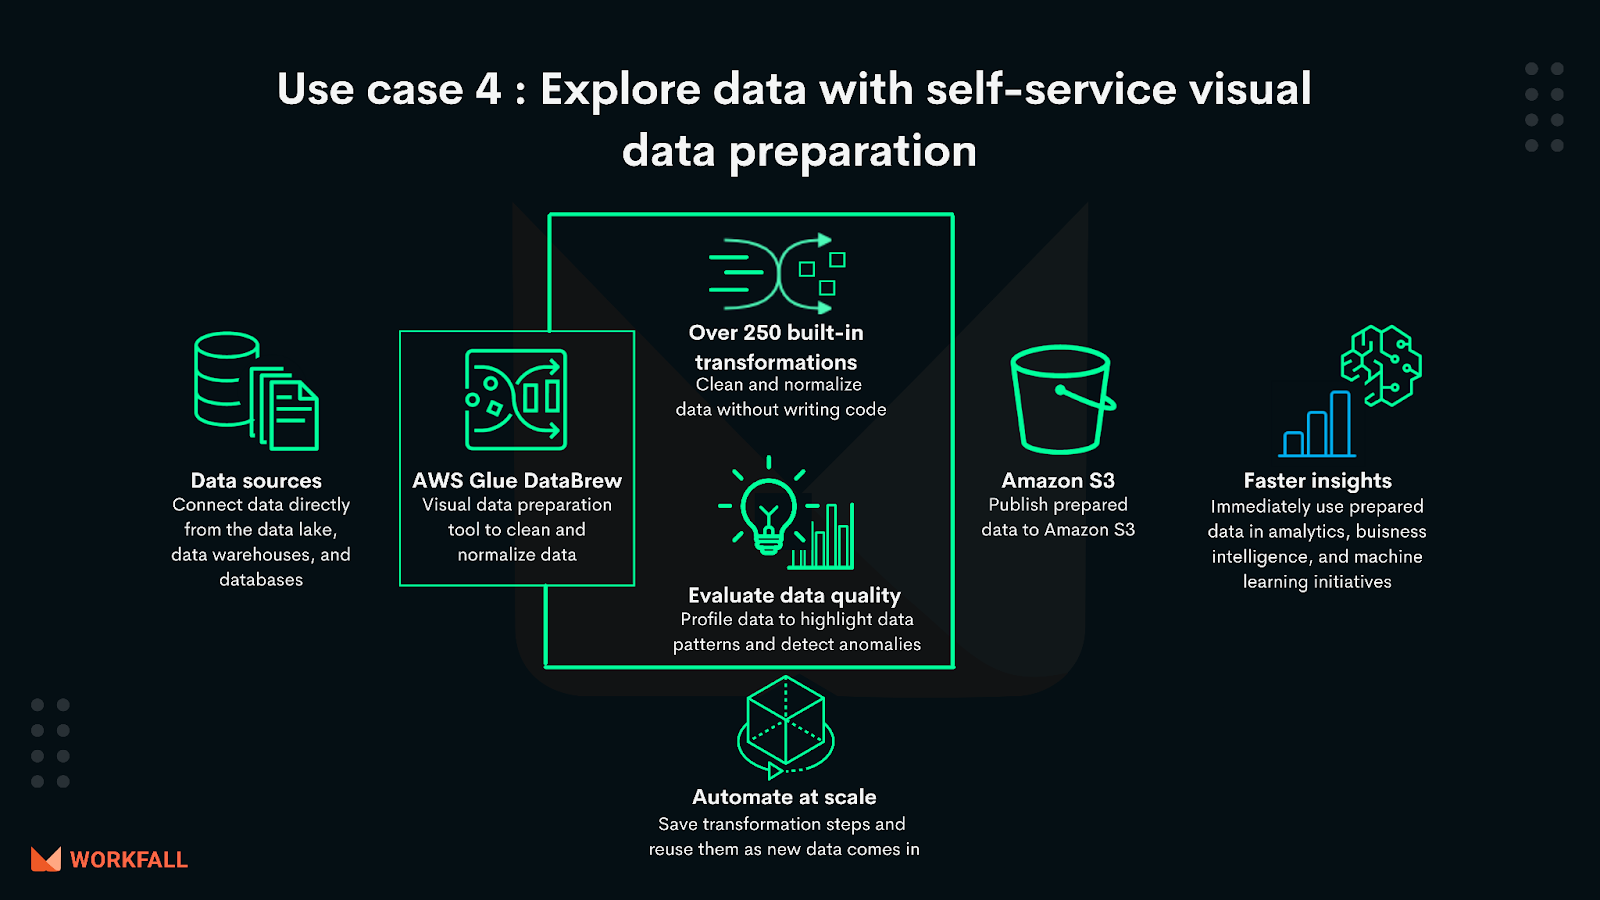 Explore data with self-service visual data preparation